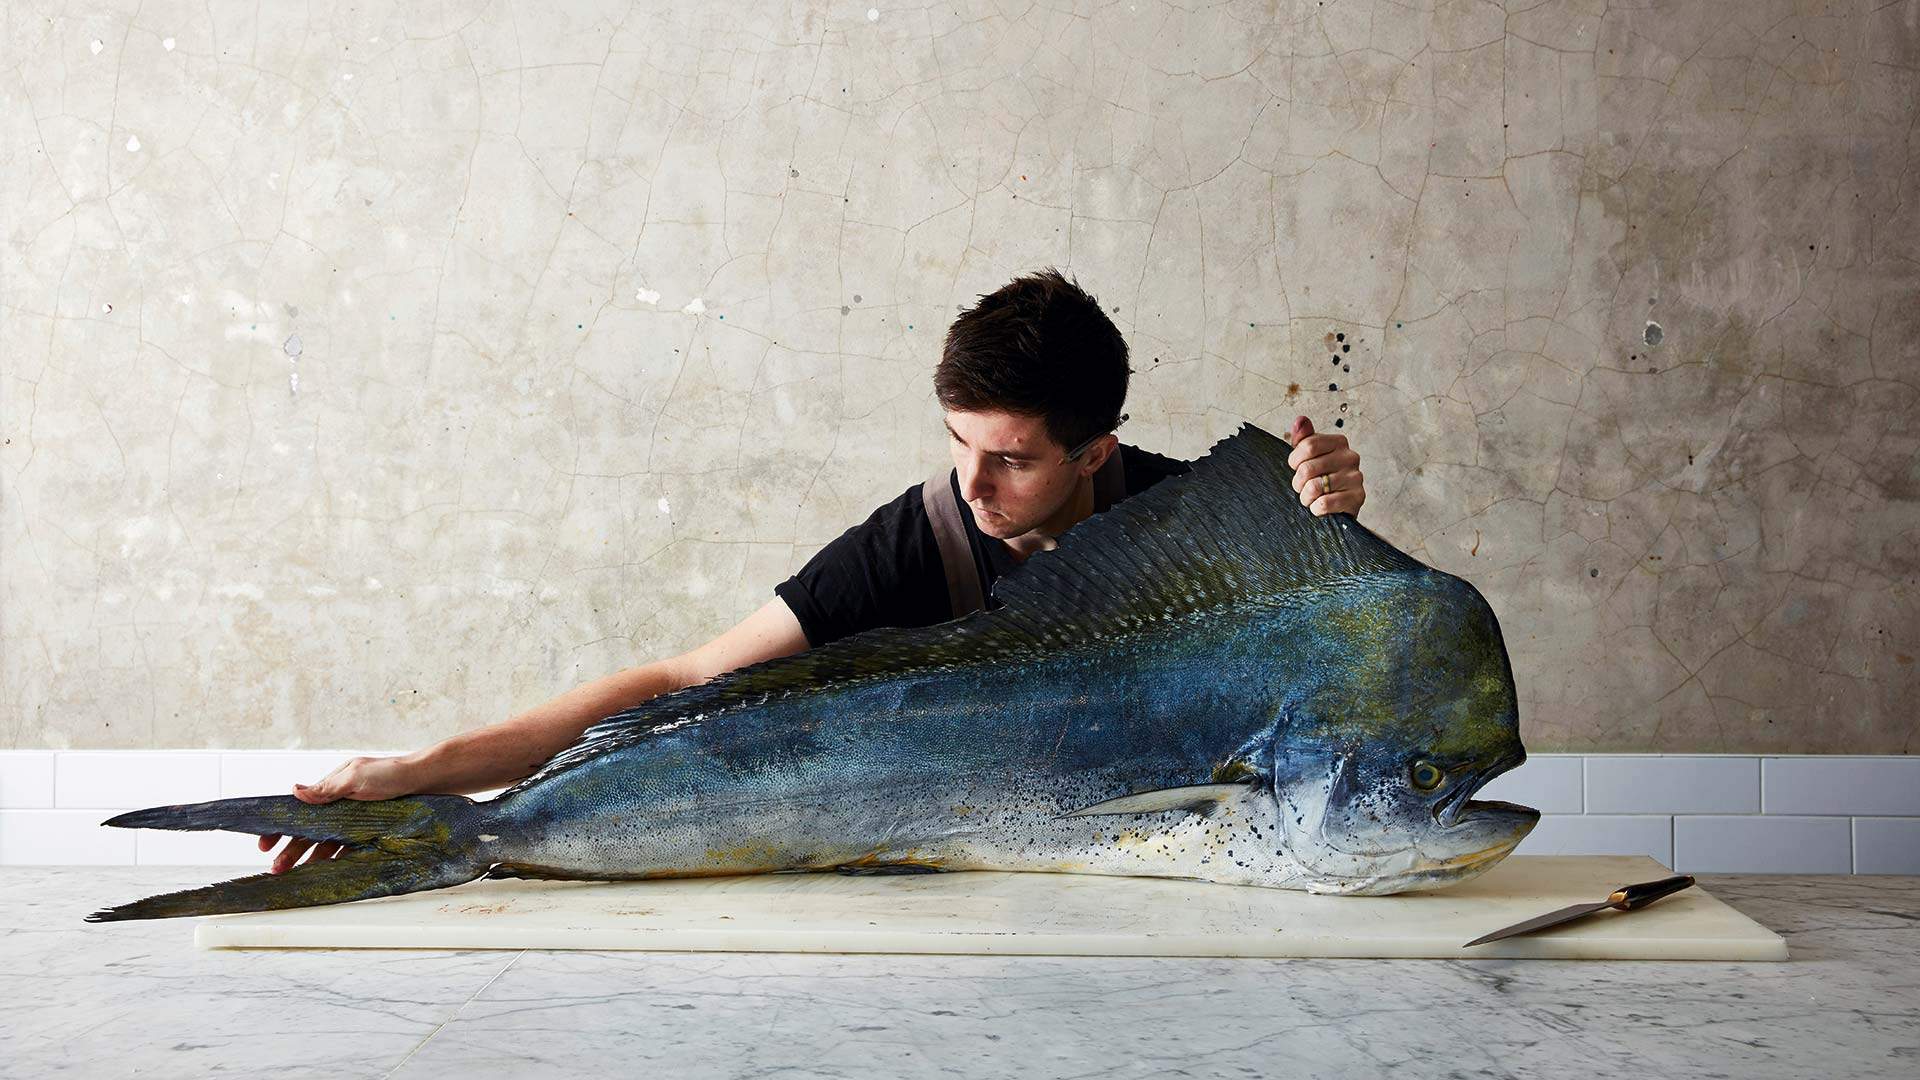 Australia's Seafood King Josh Niland Will Release His Third Cookbook 'Fish Butchery' This Winter